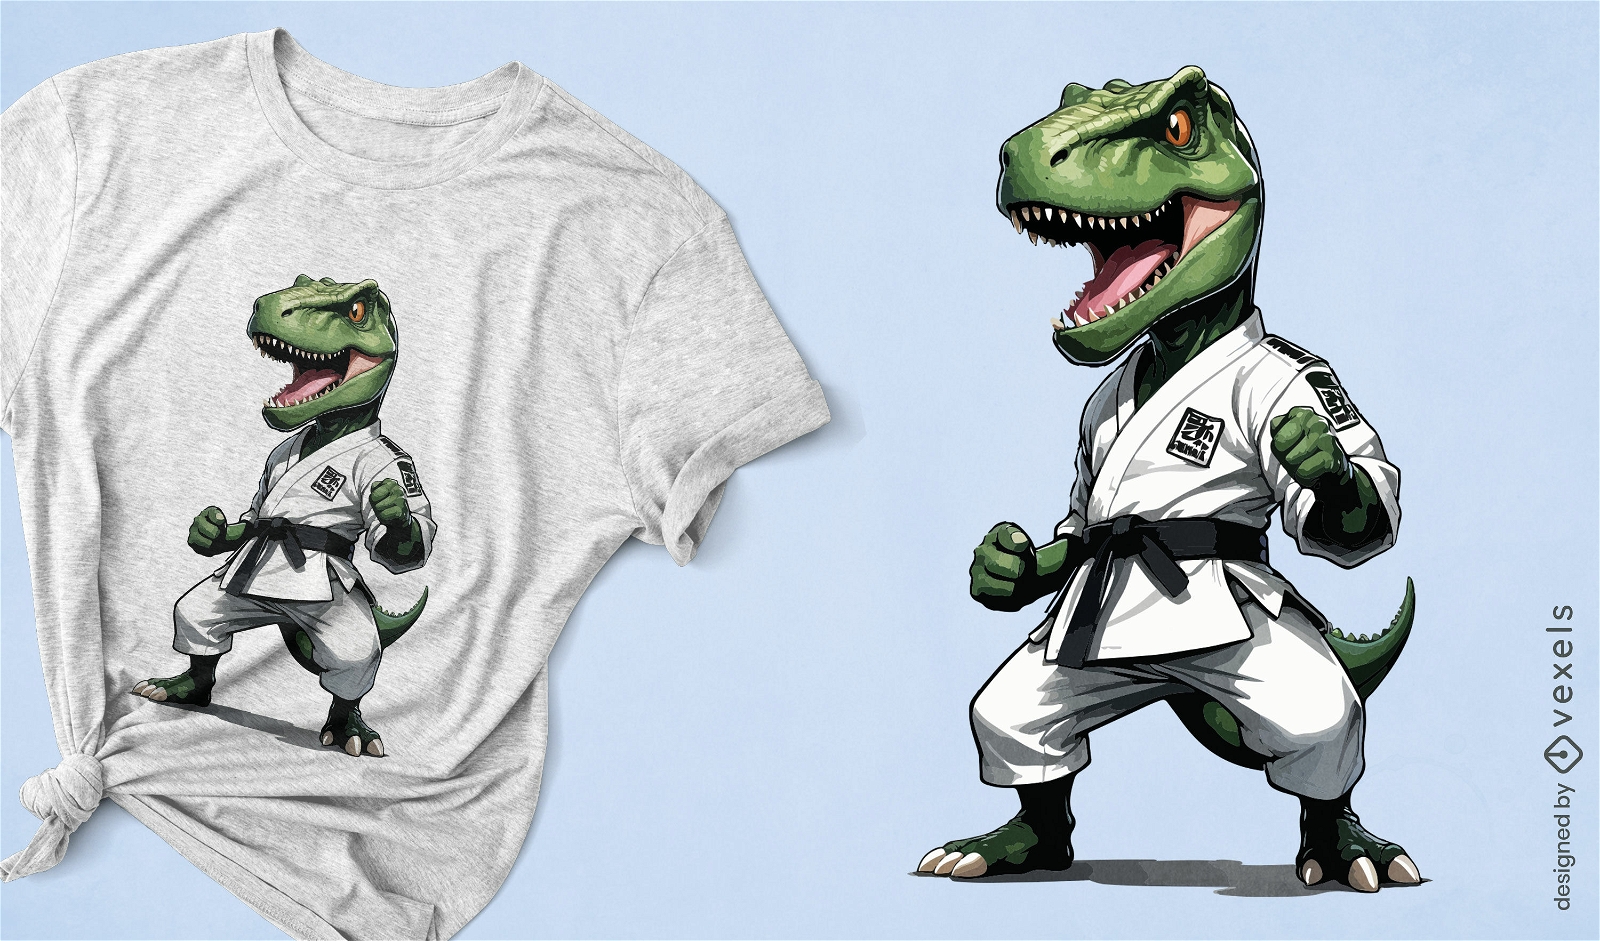 Dise?o de camiseta de dinosaurio de karate valiente.